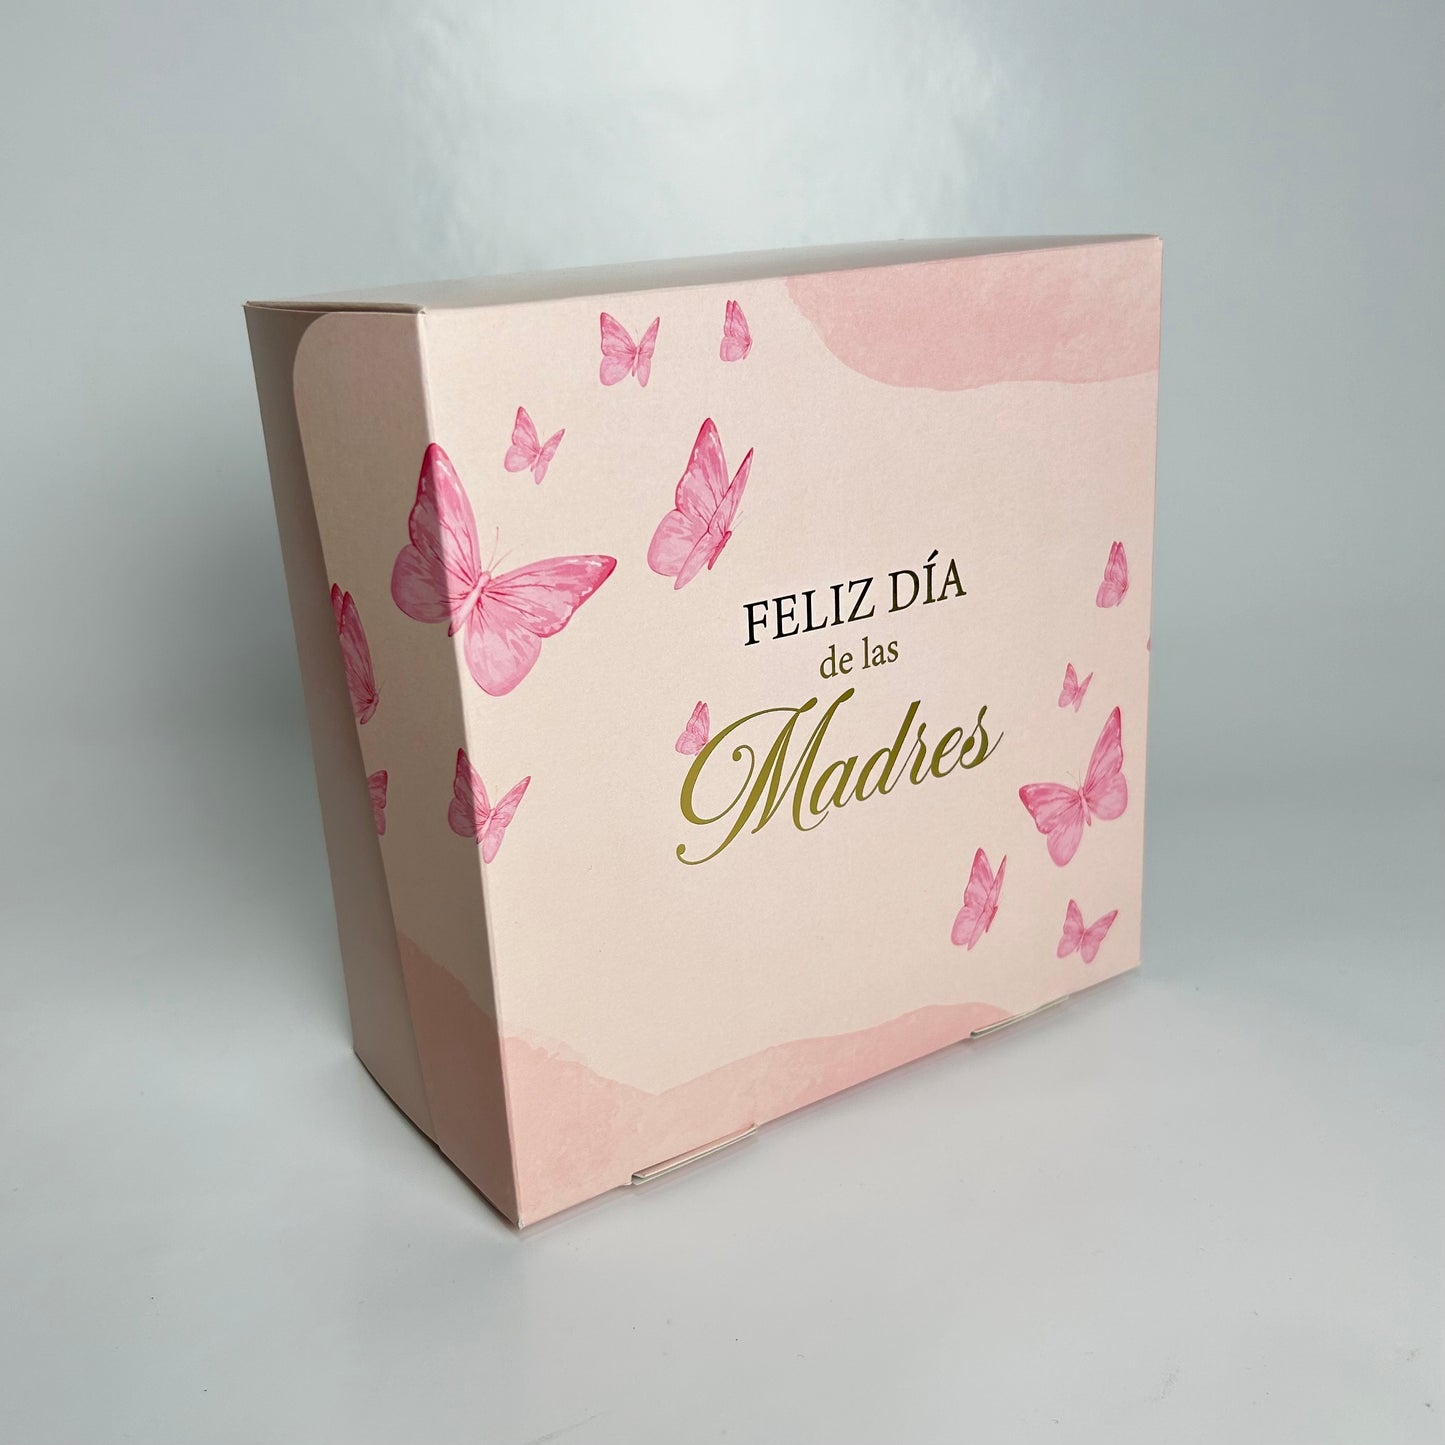 Caja 20x20x10 cm c/Folia Dorada - Día de las Madres